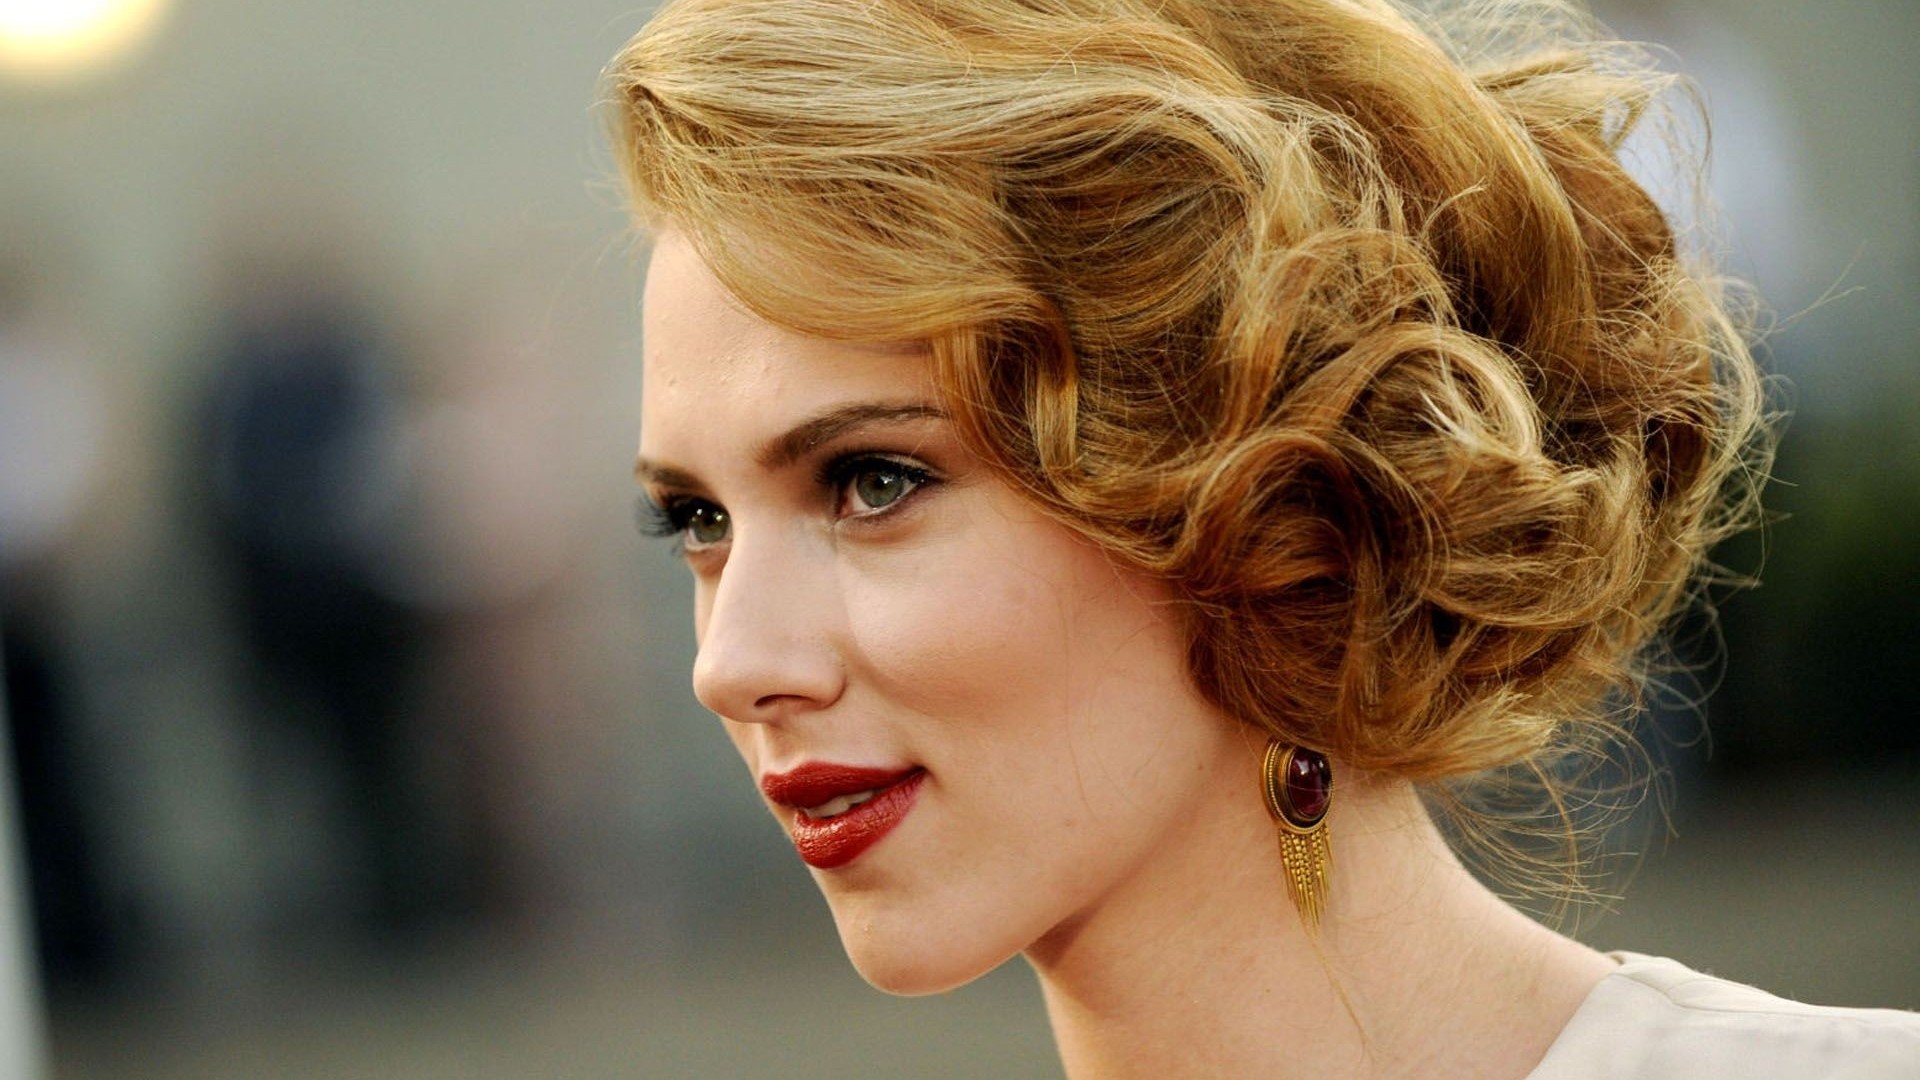 Beautiful Scarlett Johansson Cute Image Download